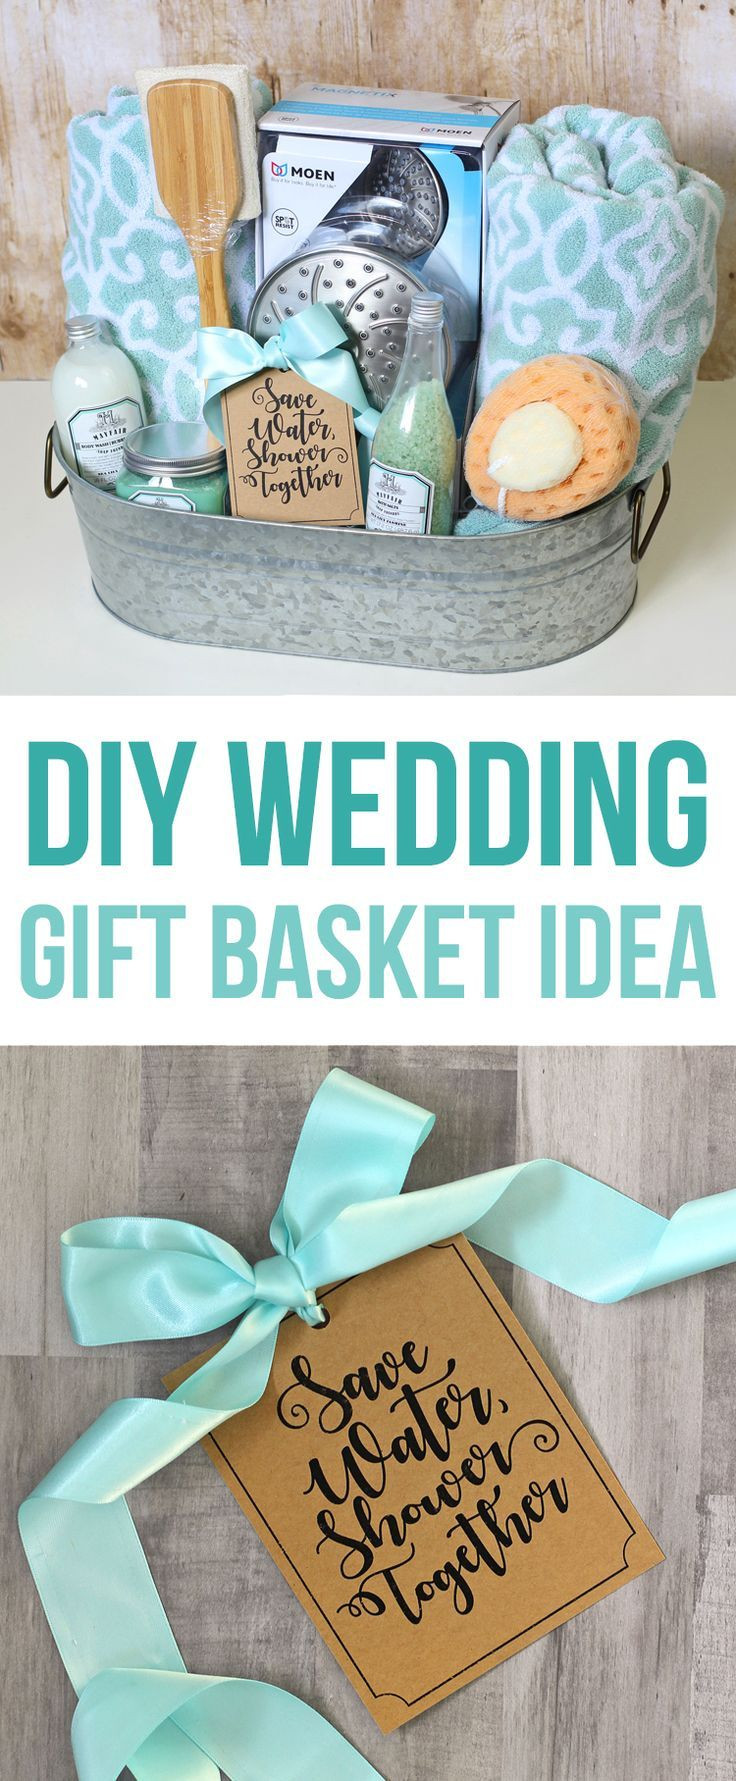 Cute Bridal Shower Gift Basket Ideas
 Shower Themed DIY Wedding Gift Basket Idea